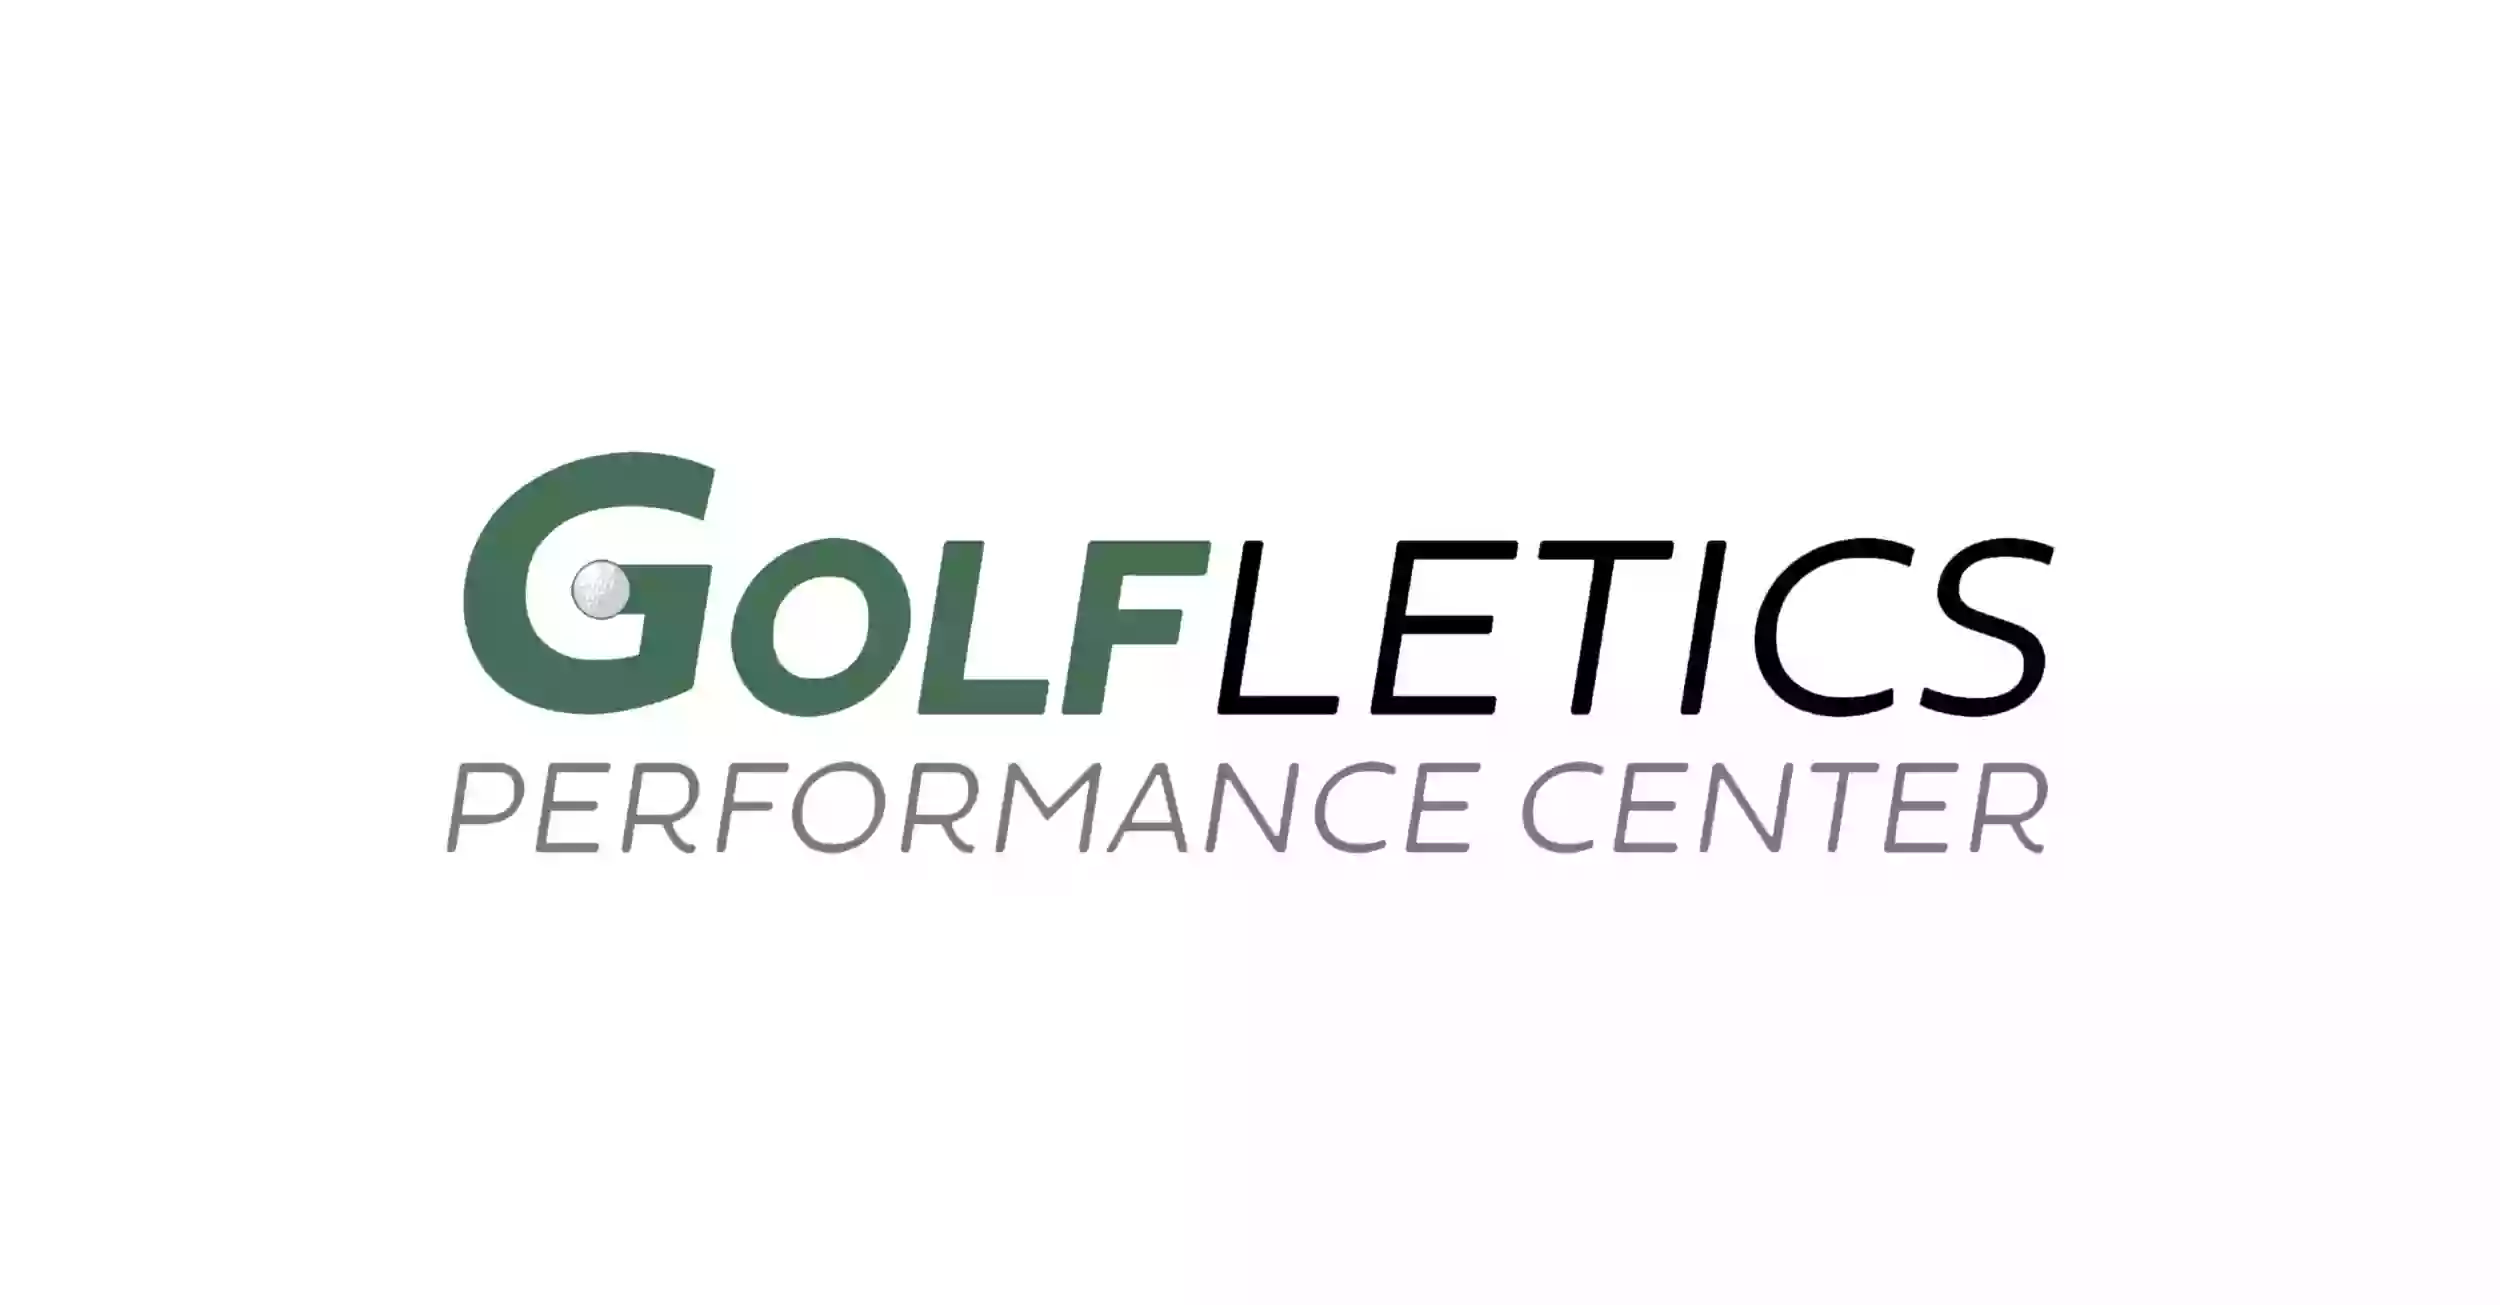 Golfletics Performance Center